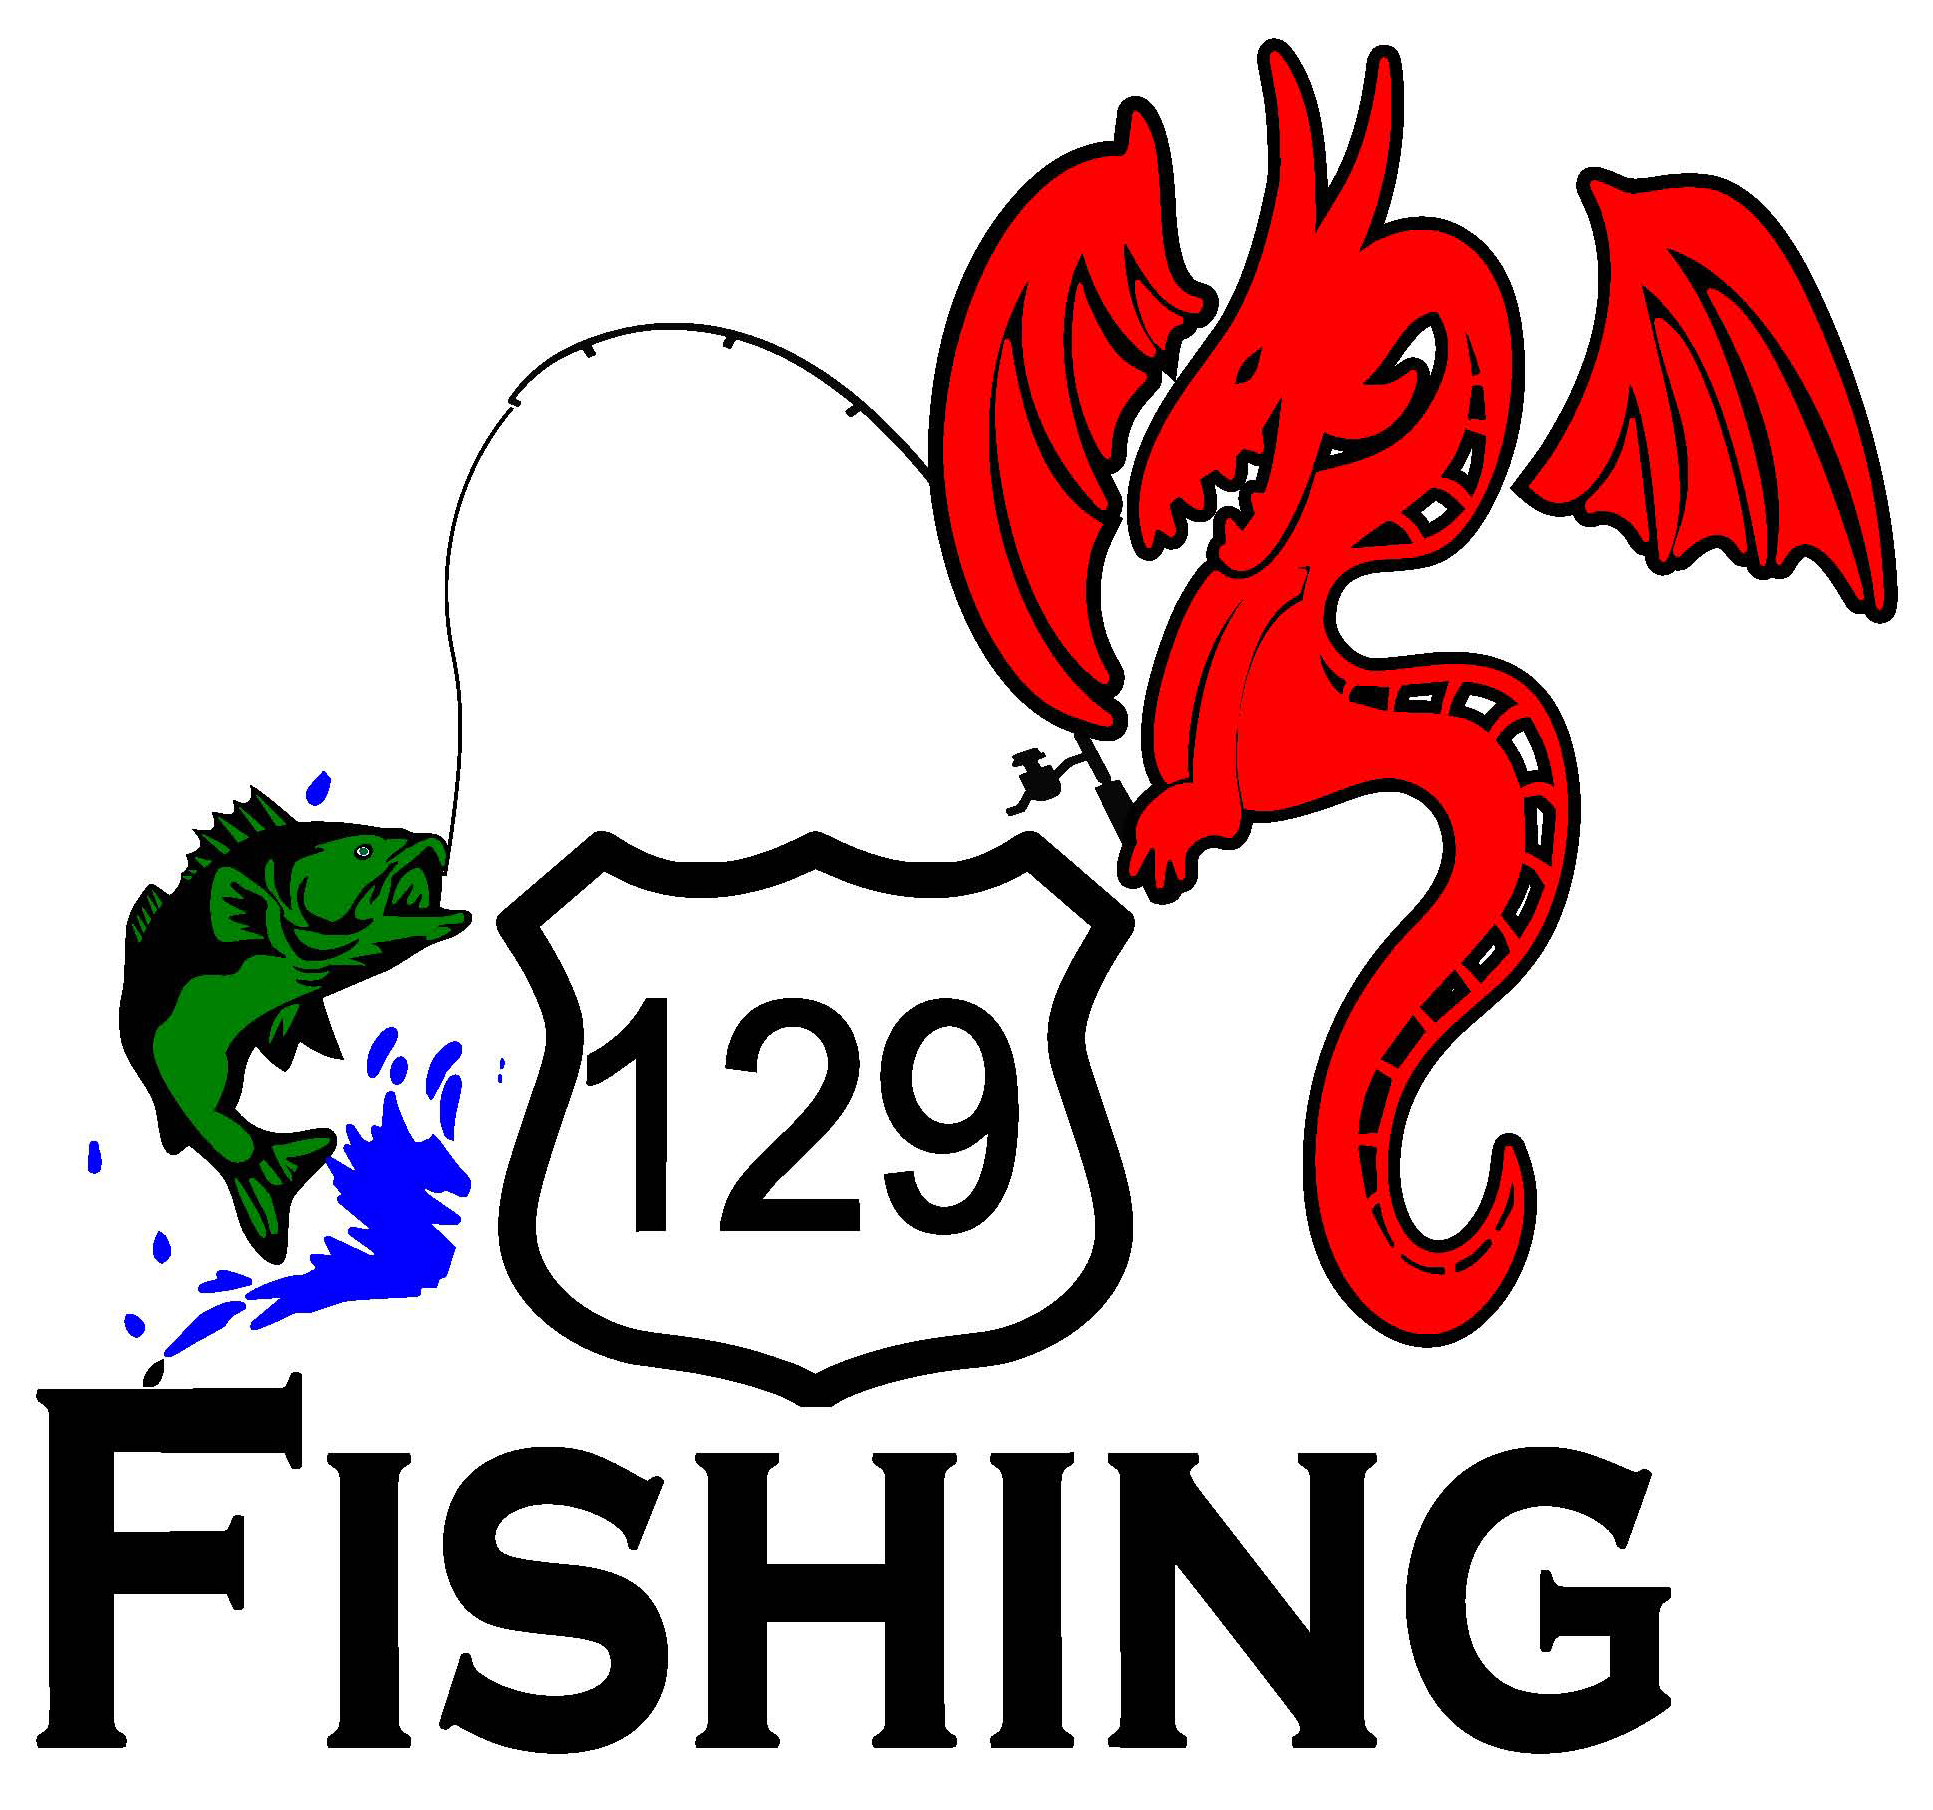 https://www.129fishing.net/wp-content/uploads/2018/09/129fishingjgLGcropped.jpg